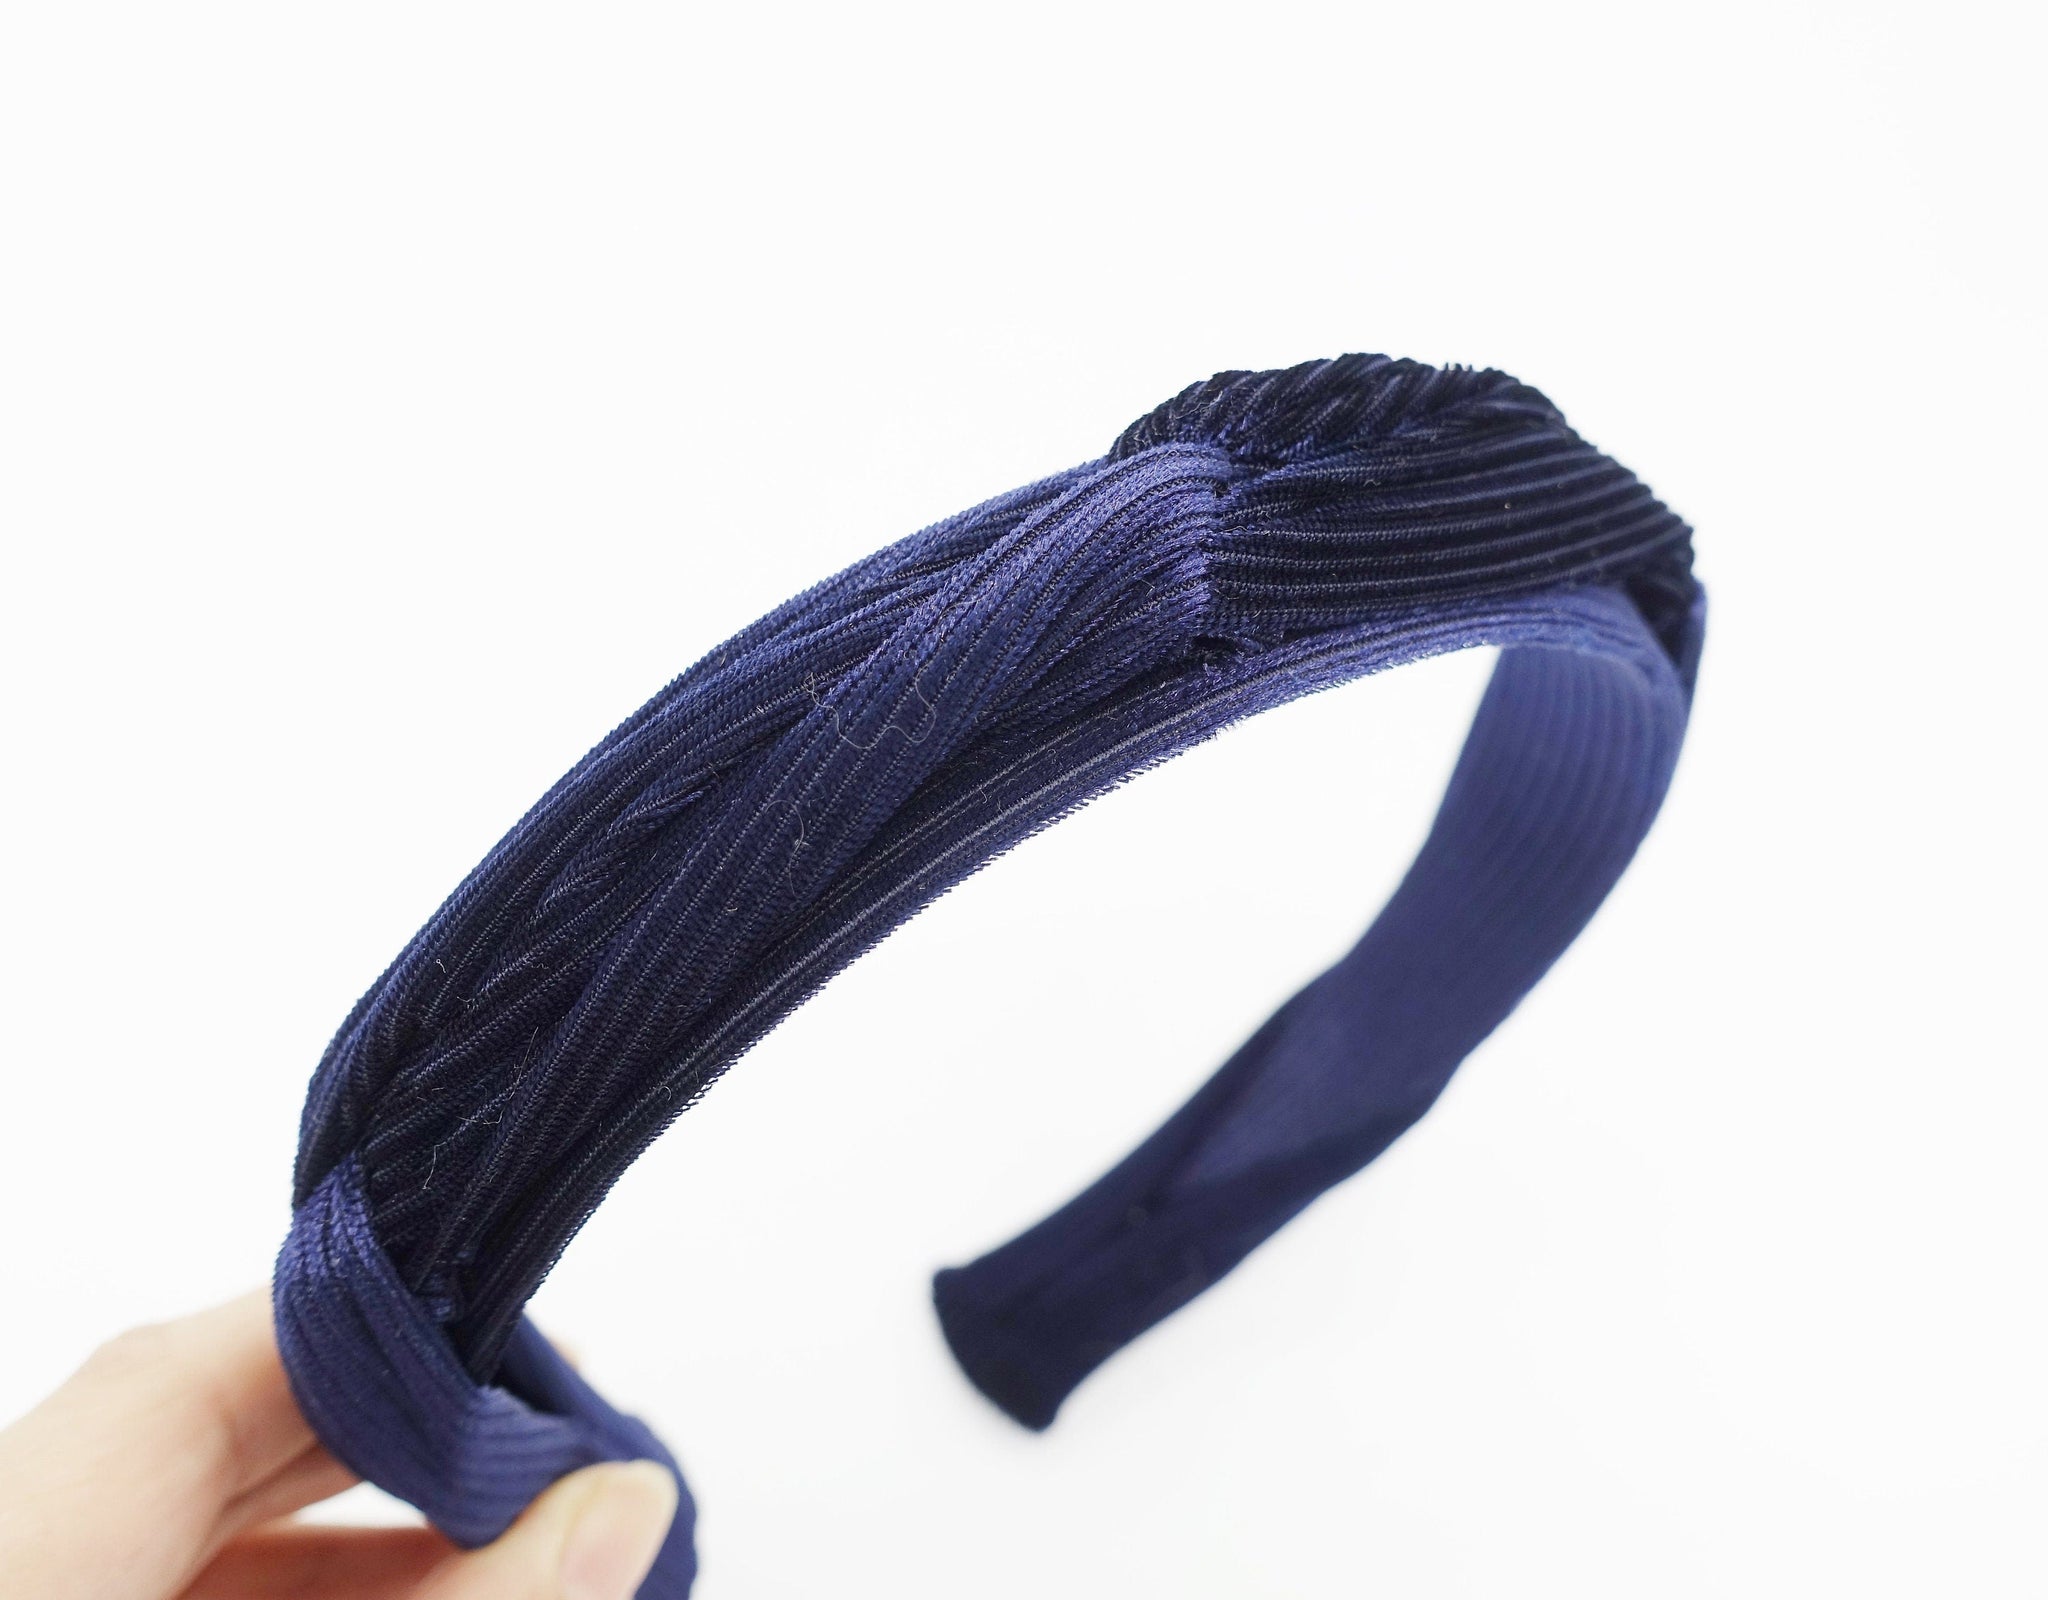 VeryShine Headband Navy velvet corduroy headband hand sewn cross pattern grosgrain hairband women hair accessory